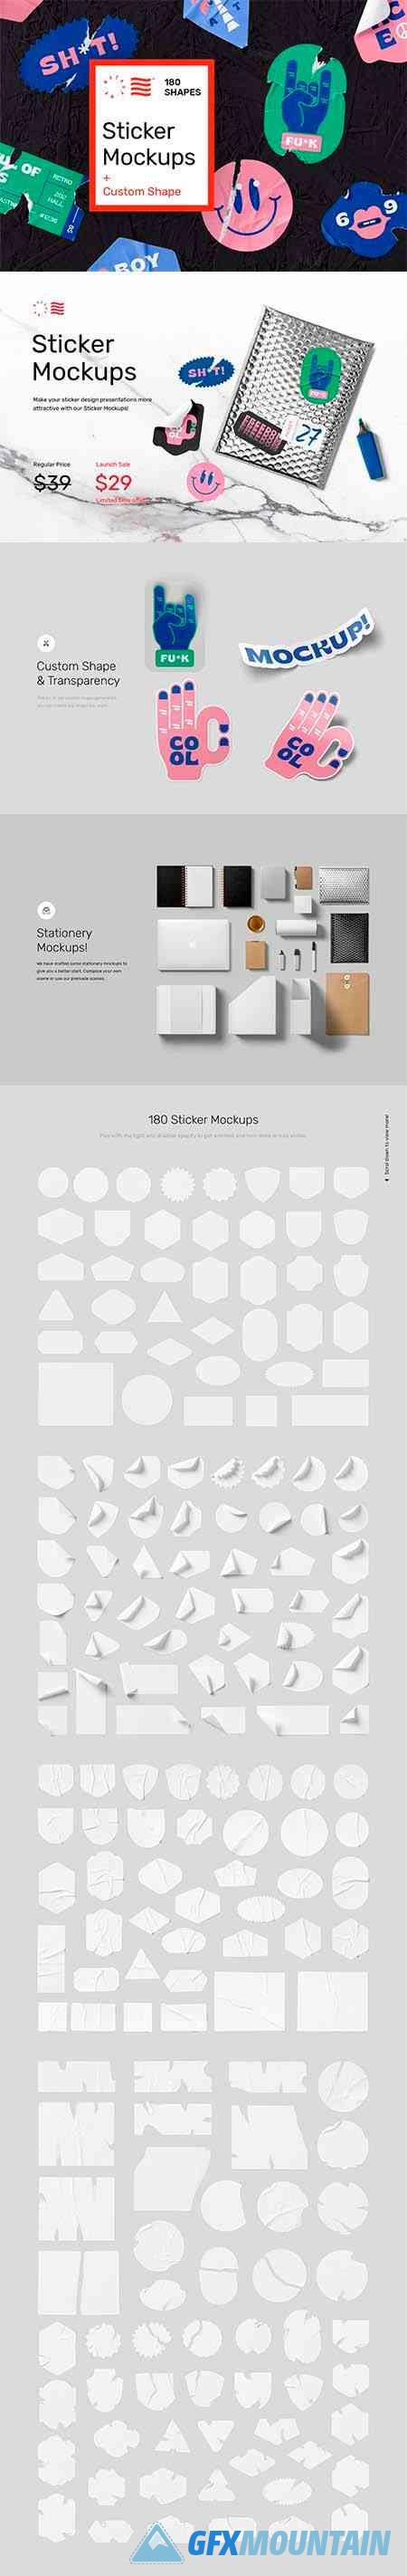 Sticker Mockups - Shape Generator - 6412064